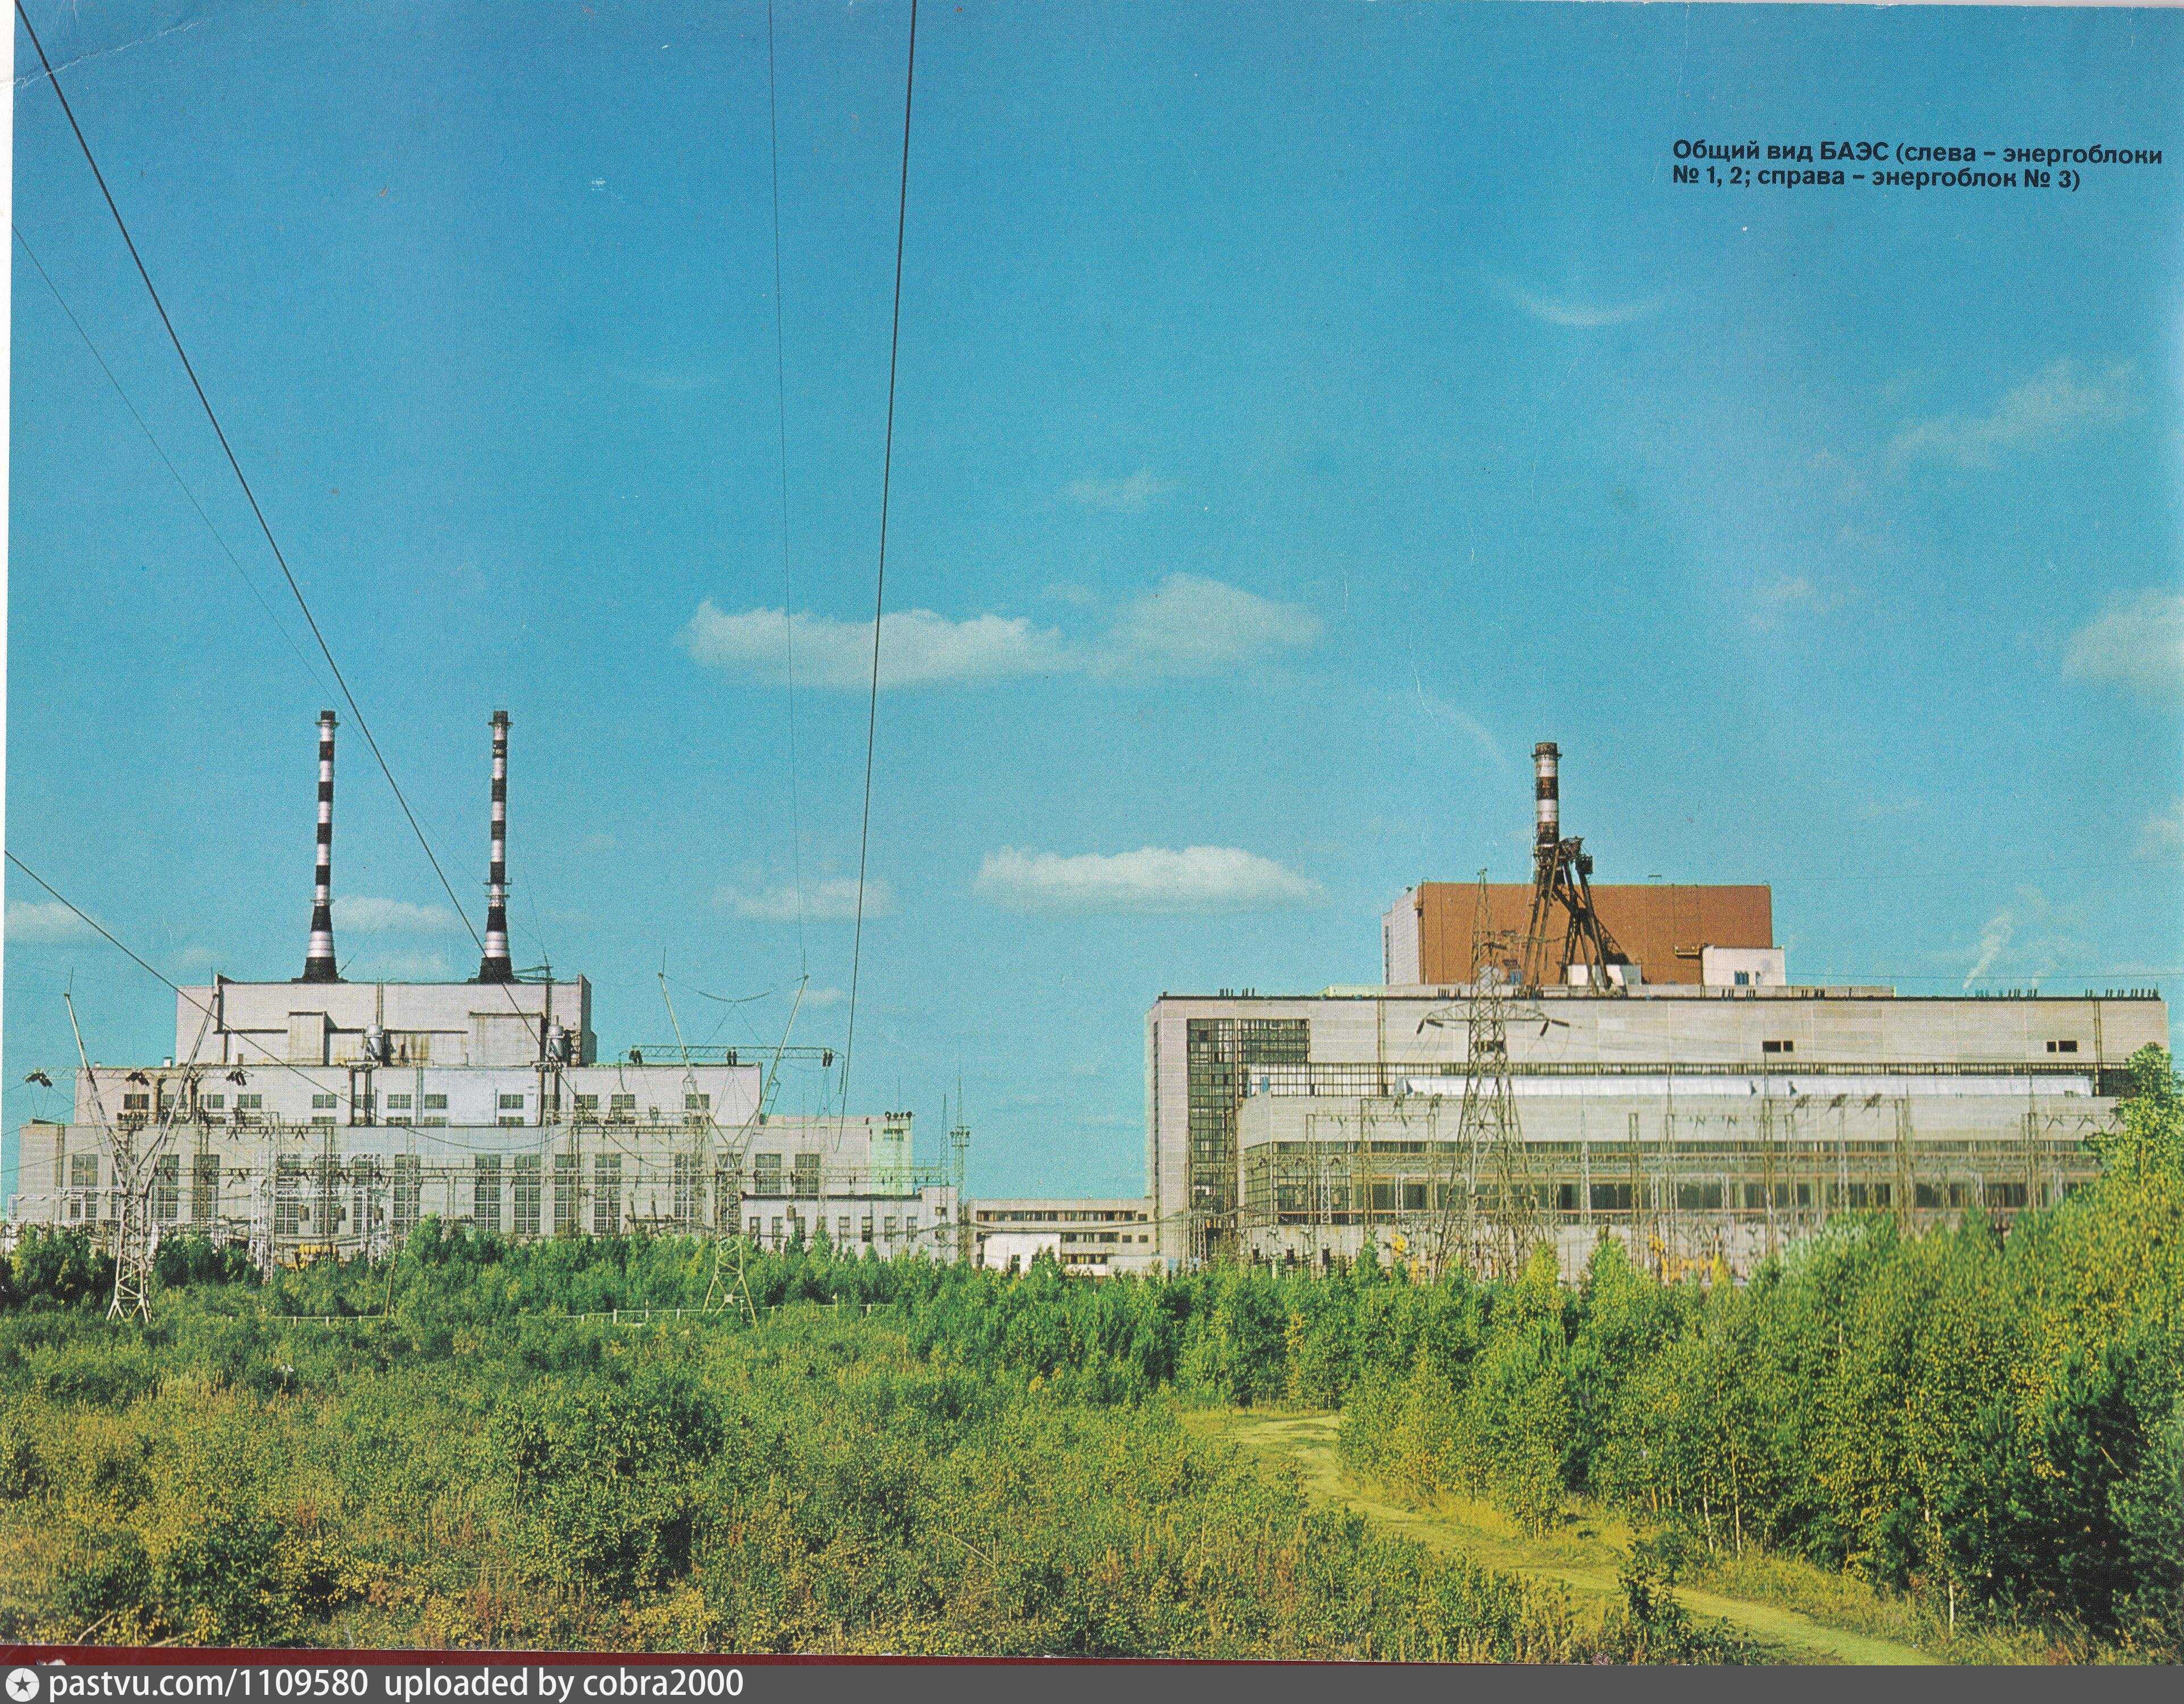 Аэс имени курчатова. Белоярская атомная электростанция. БАЭС (Белоярская атомная электростанция). Белоярская АЭС им. и. в. Курчатова (1 485 МВТ). Белоярская АЭС Курчатов.